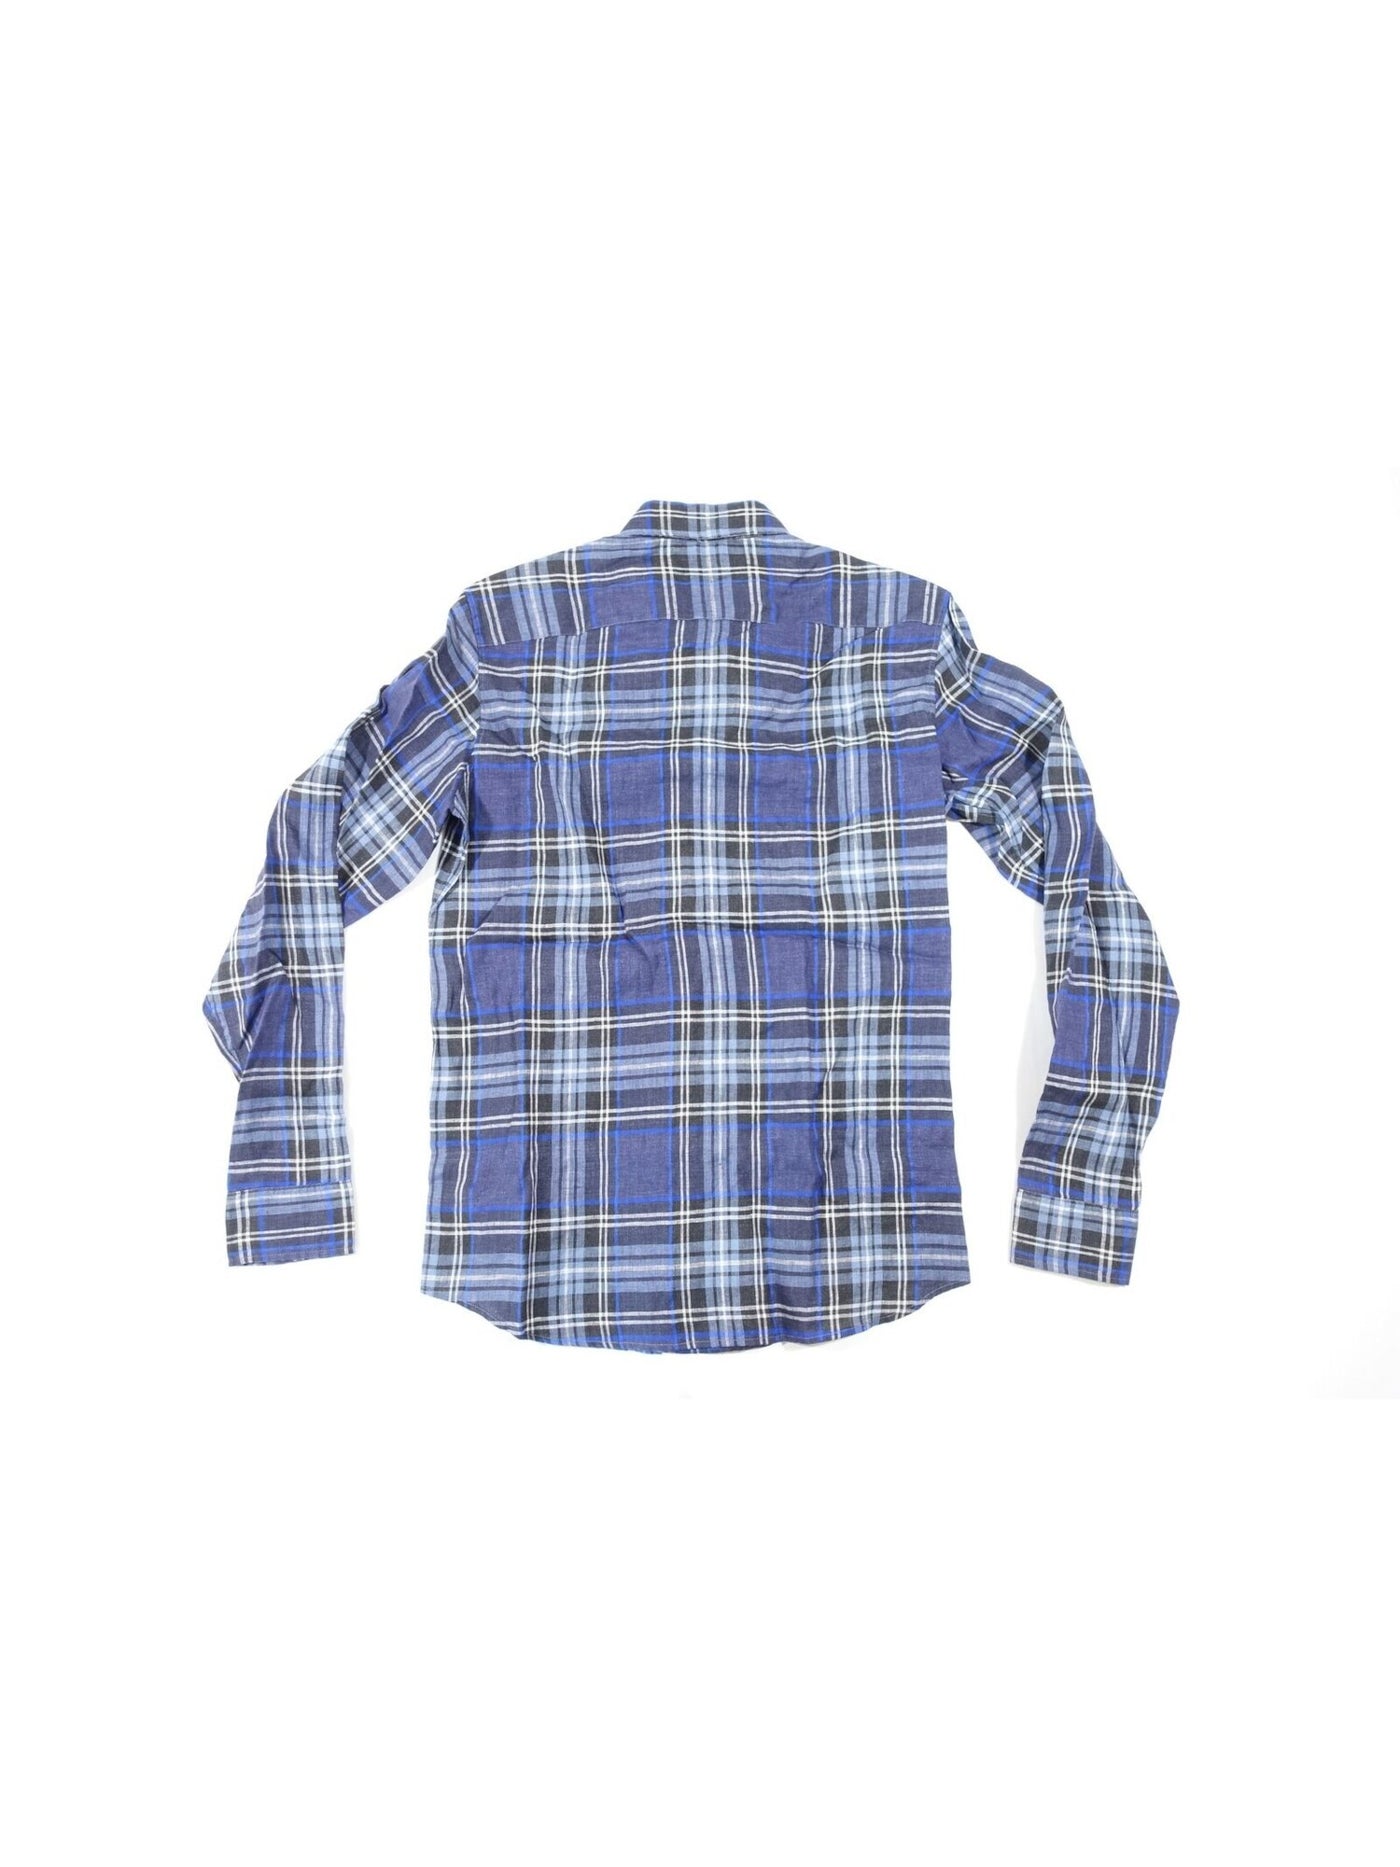 MICHAEL KORS Mens Blue Plaid Long Sleeve Collared Slim Fit Button Down Shirt XXL